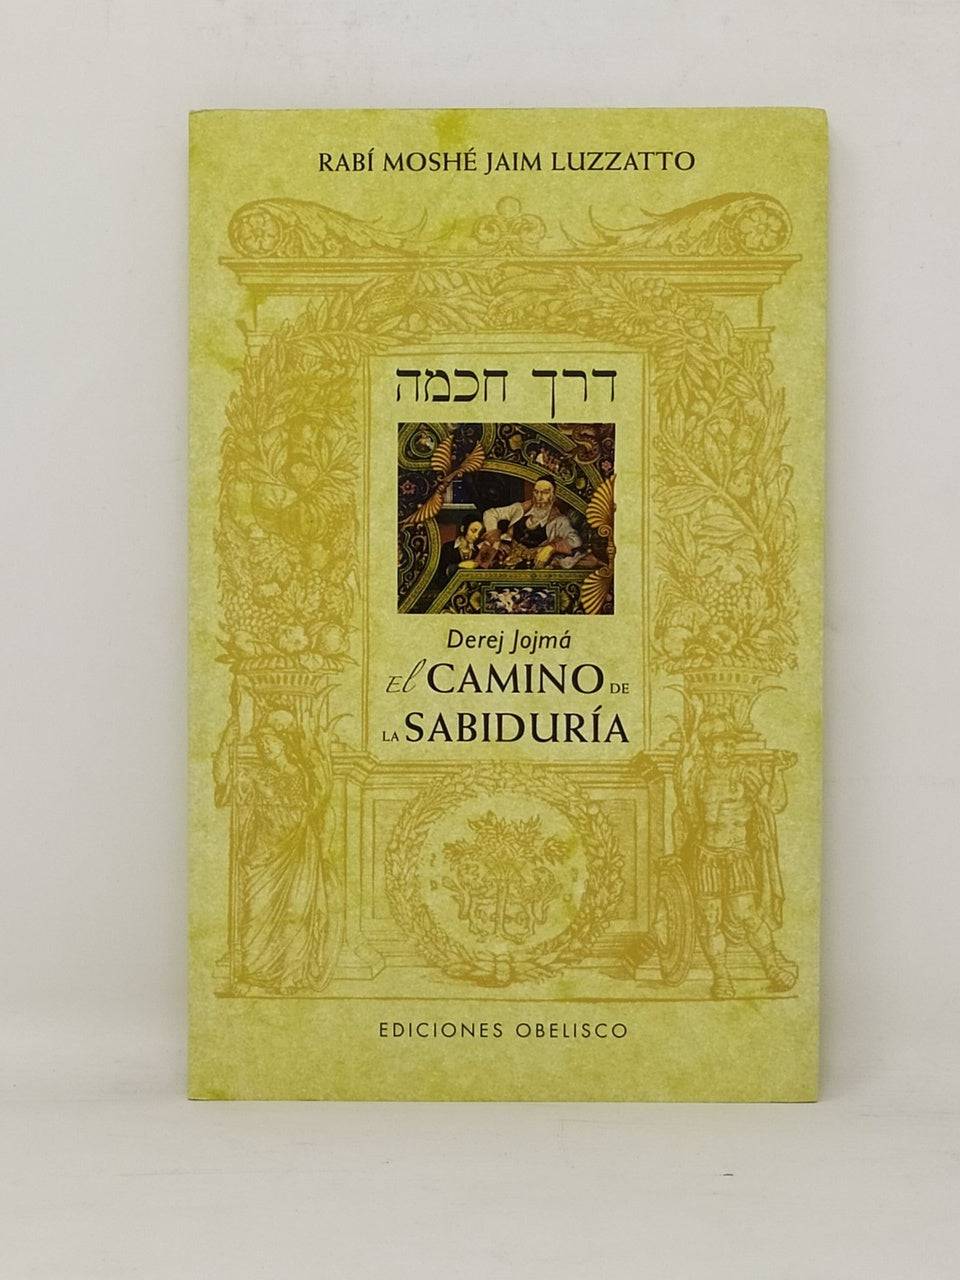 El Camino De La Sabiduria (Derej Jojma) - Libreria Jerusalem Centro